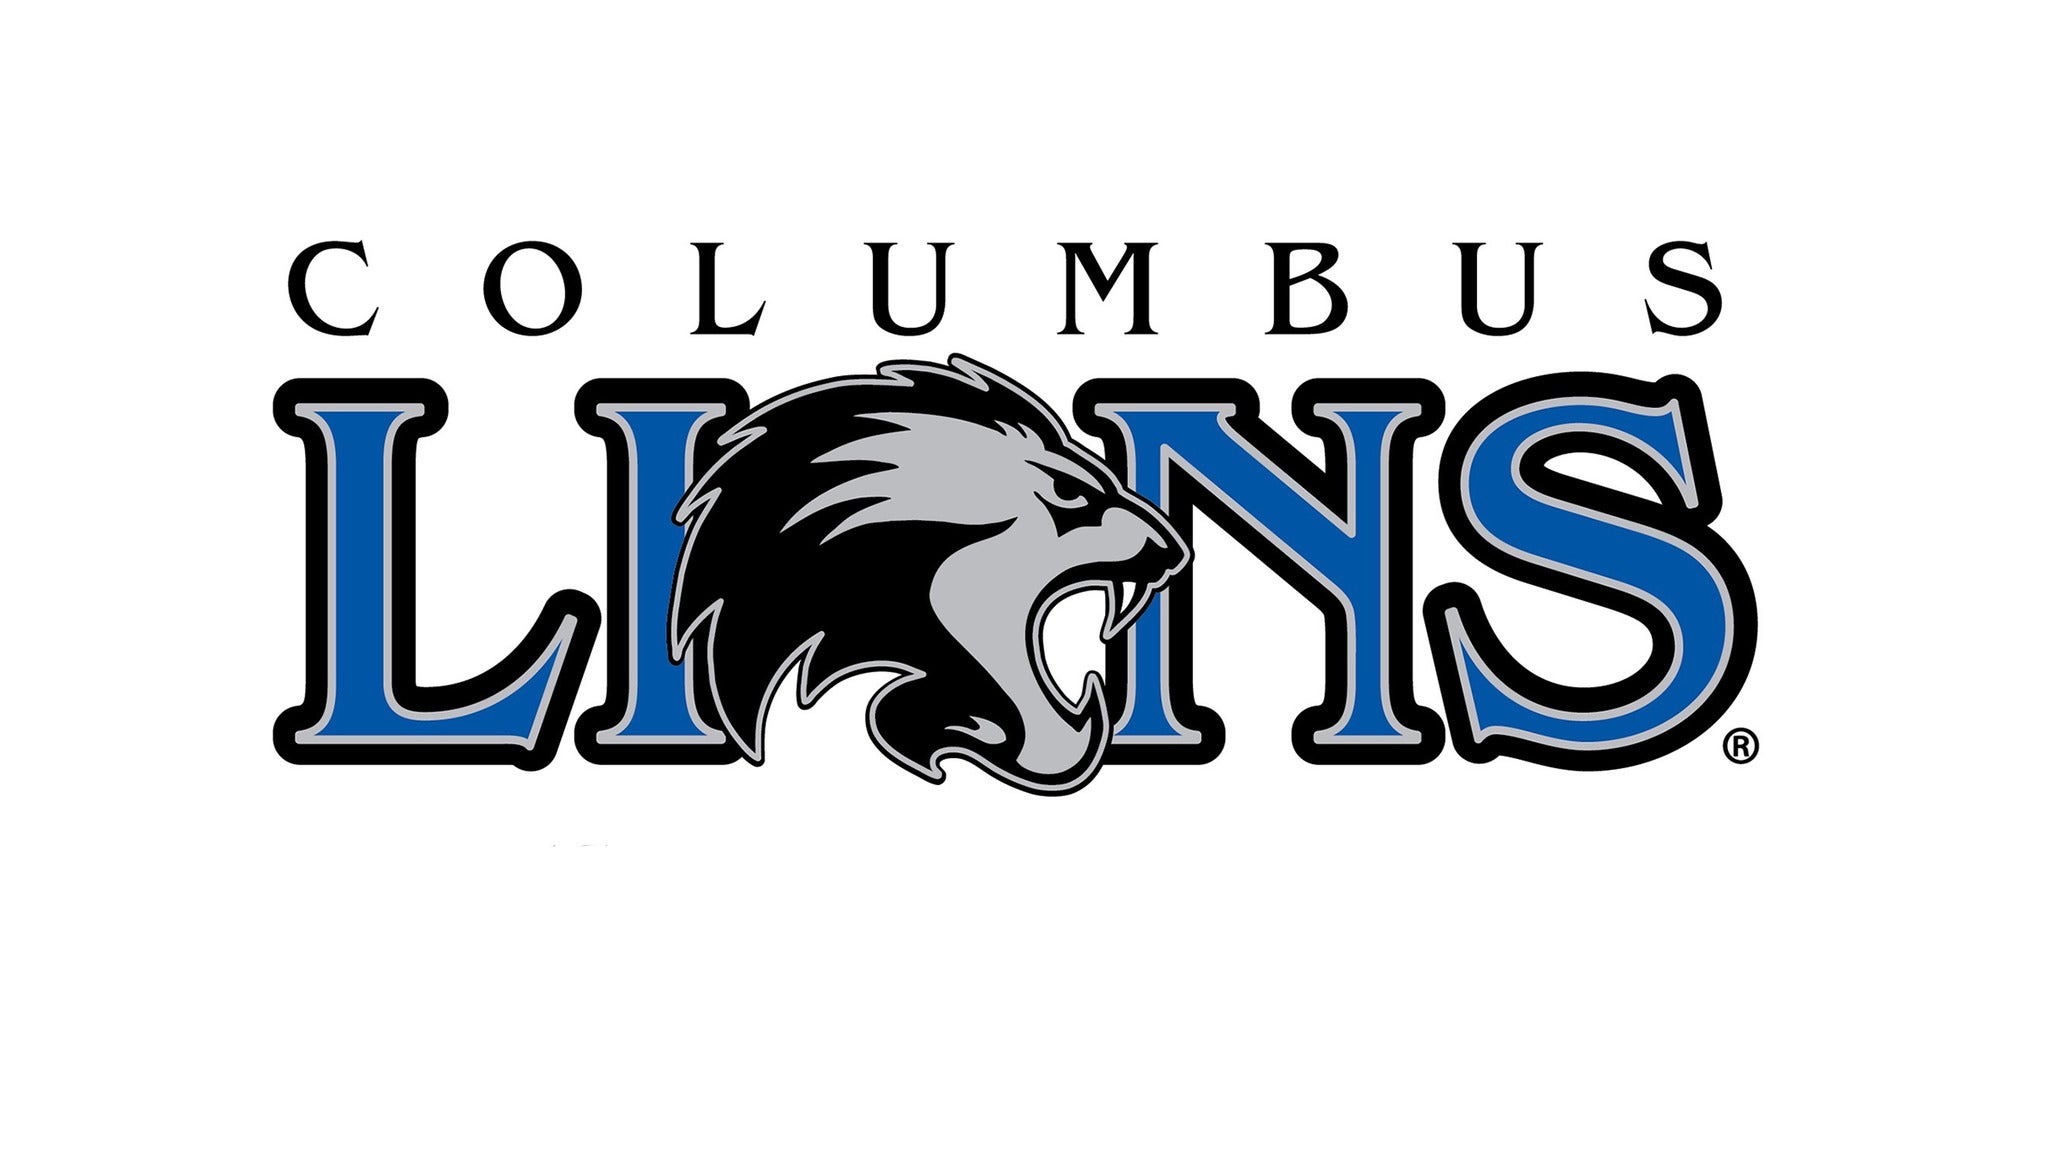 Columbus Lions